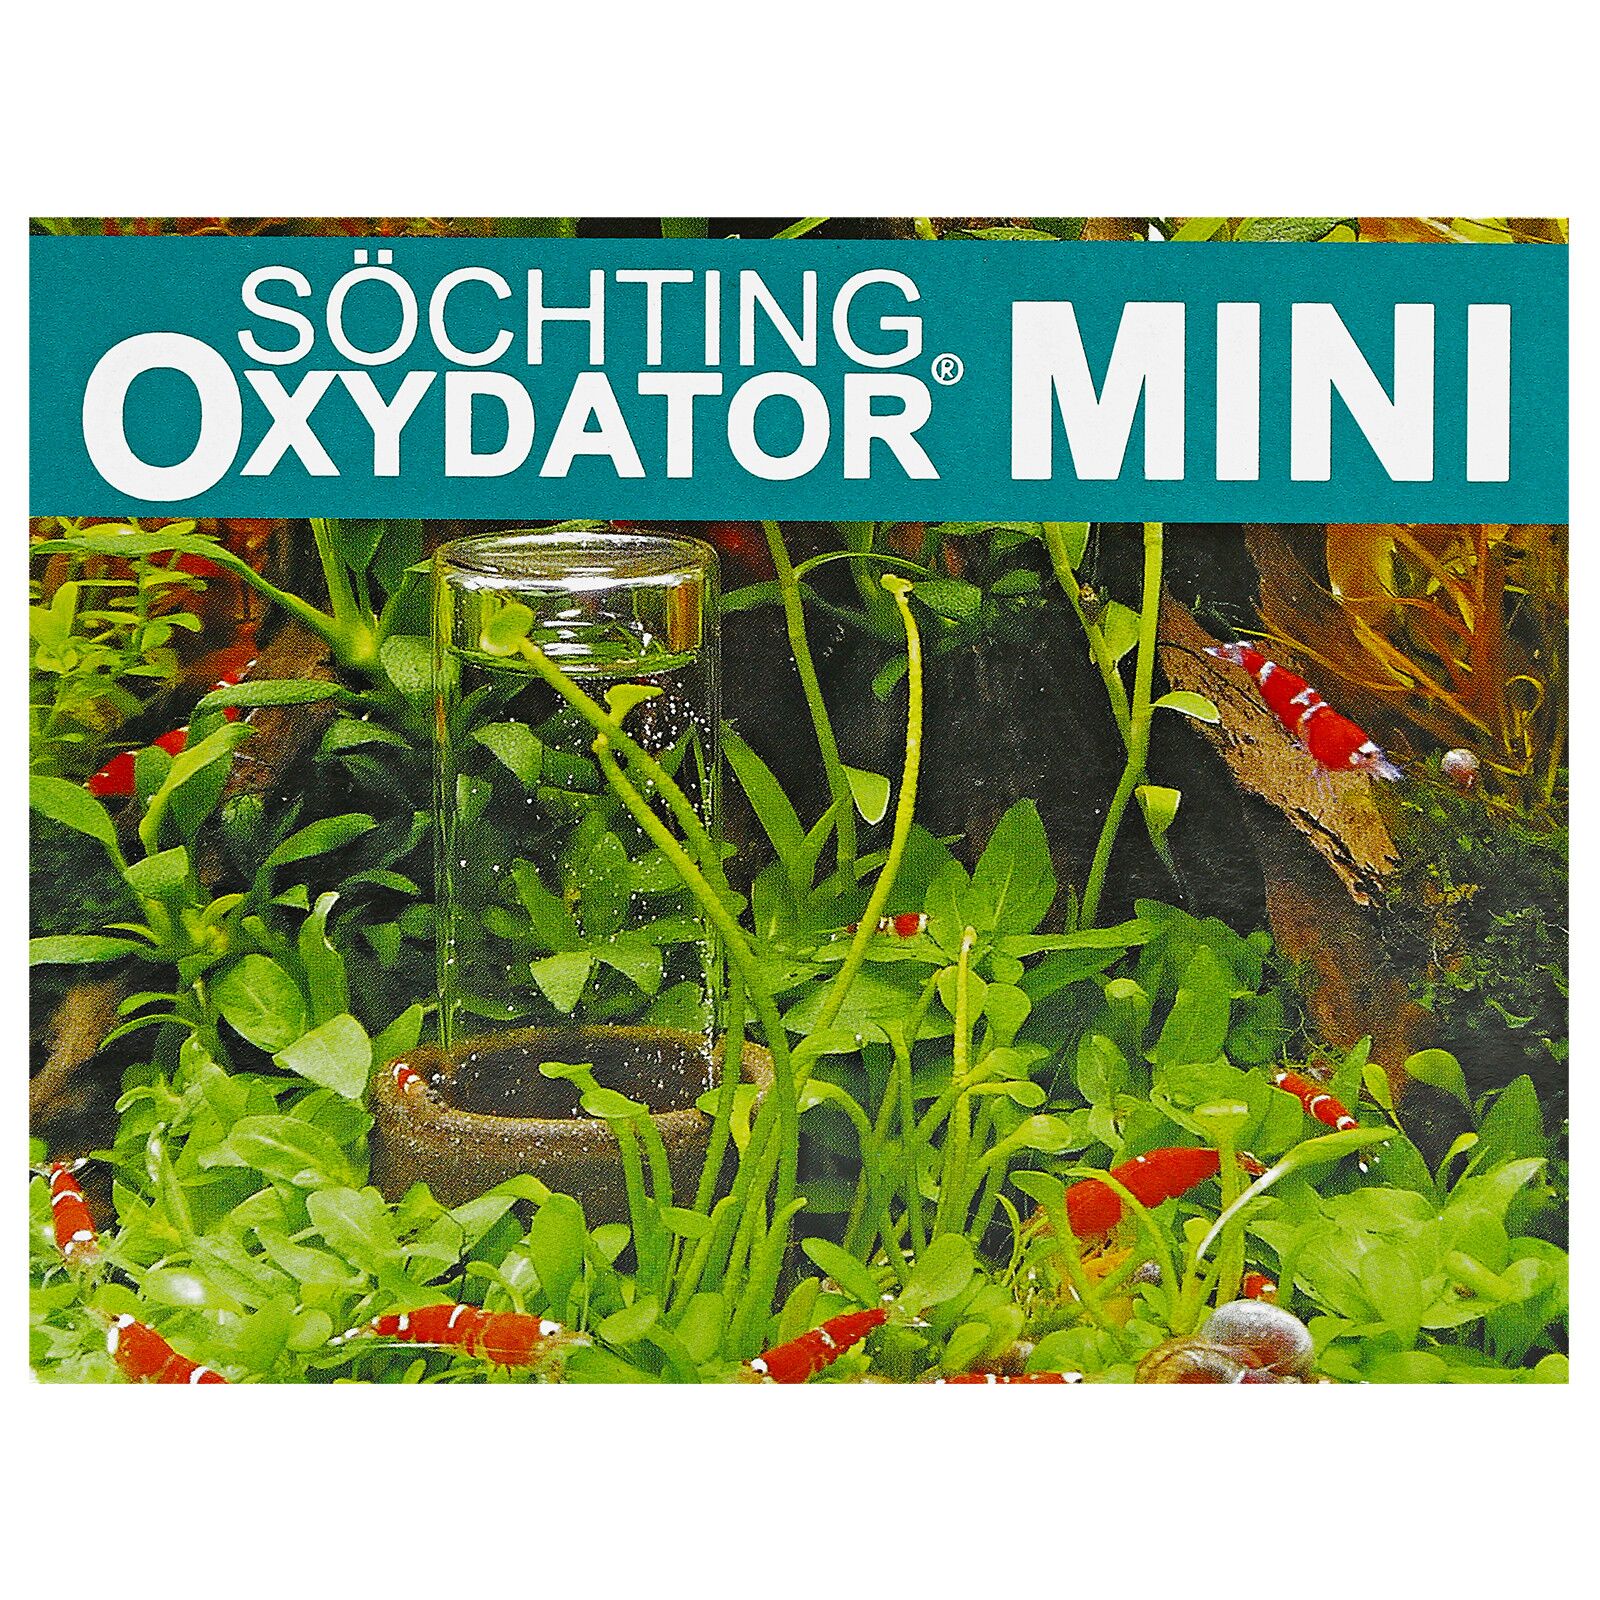 Söchting Oxydator Mini | Aquasabi - Aquascaping Shop